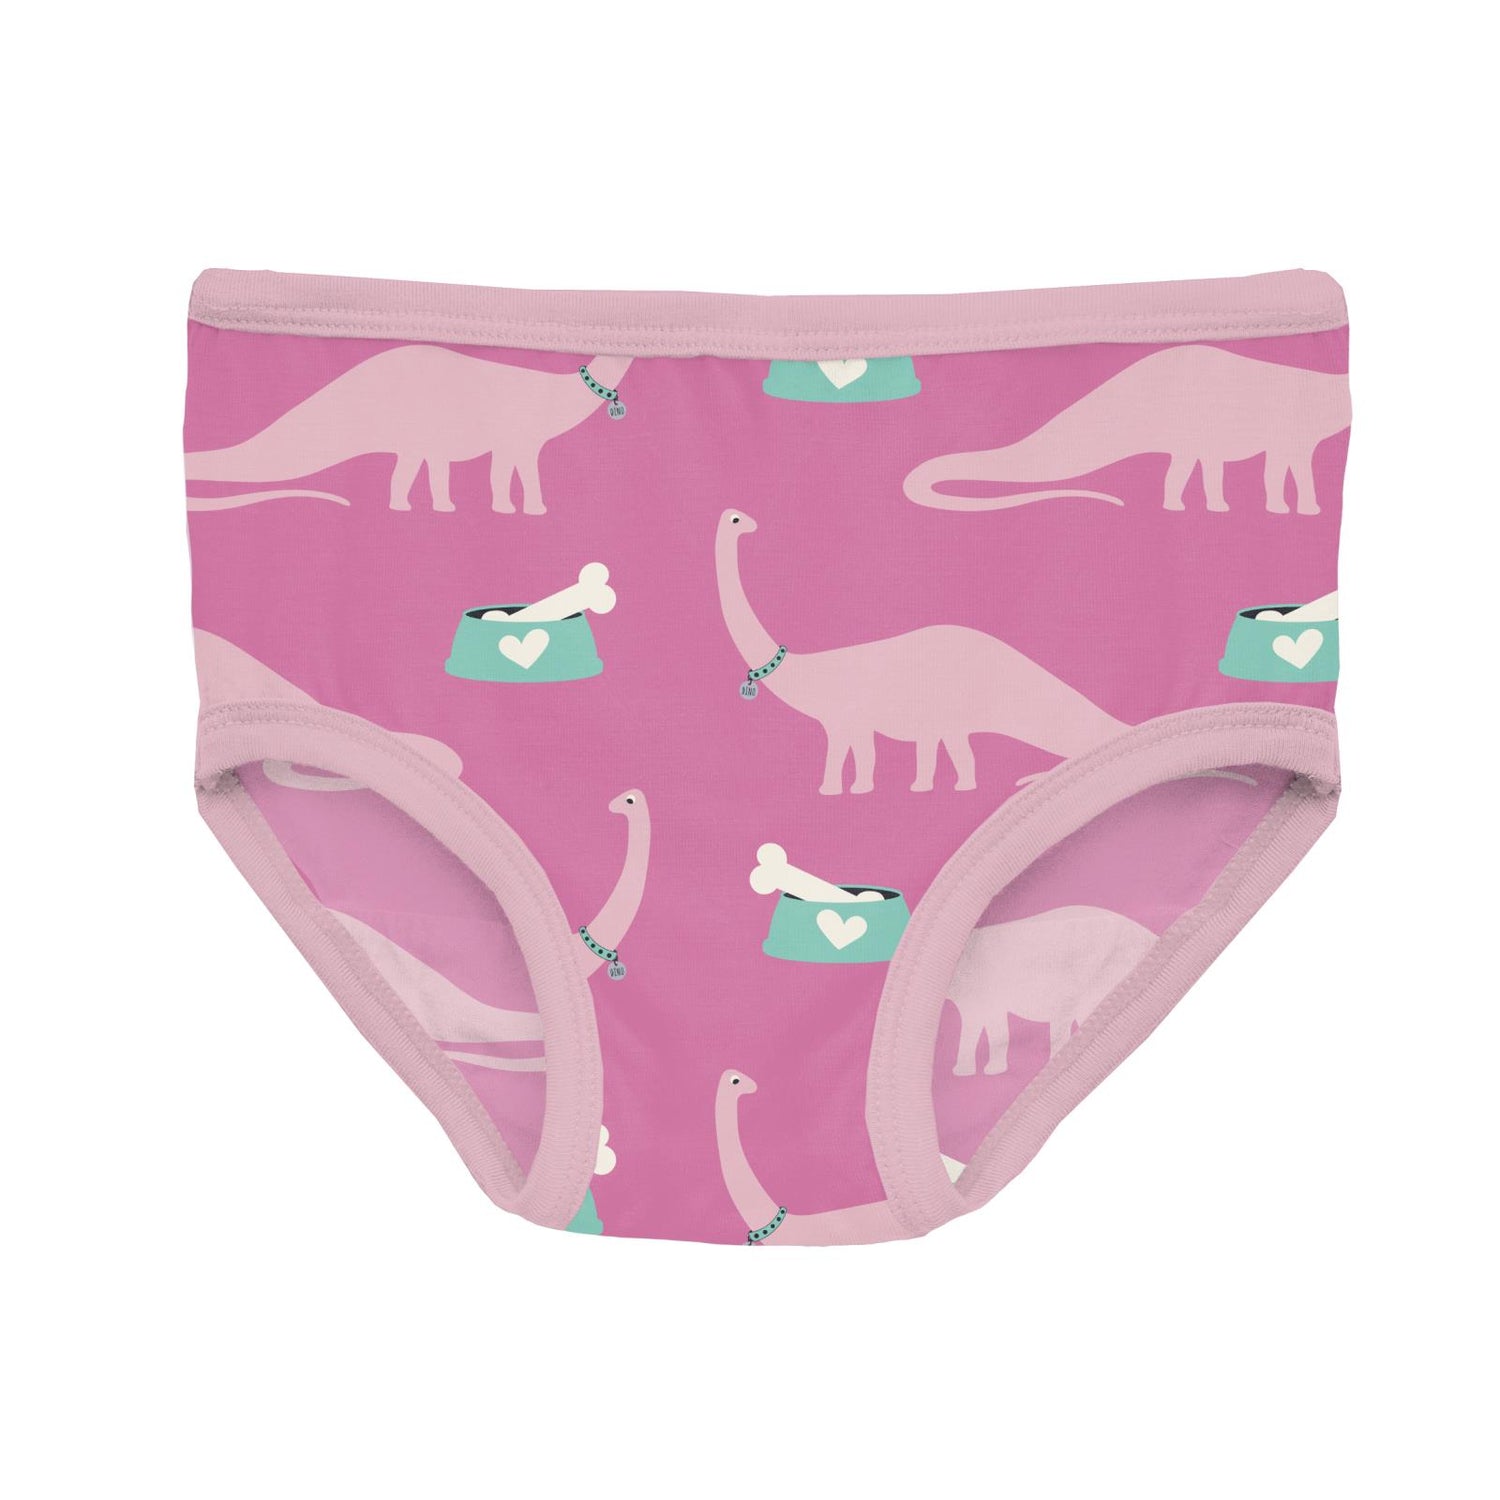 Print Girl's Underwear Set of 3 in Natural ABC Monsters, Cake Pop & Tulip Pet Dino